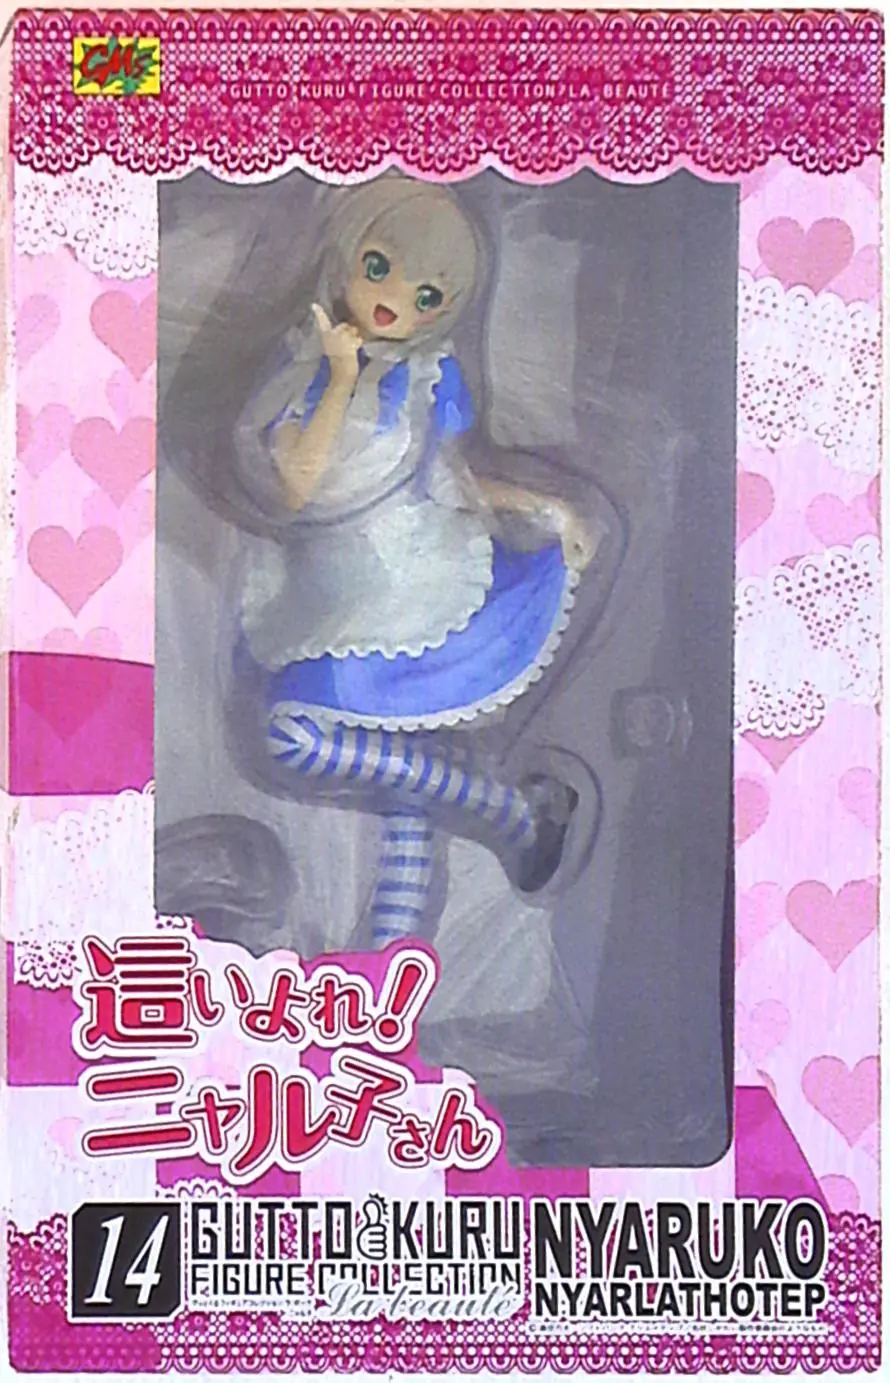 Gutto-Kuru Figure Collection - Haiyore! Nyaruko-san (Nyaruko: Crawling With Love!)